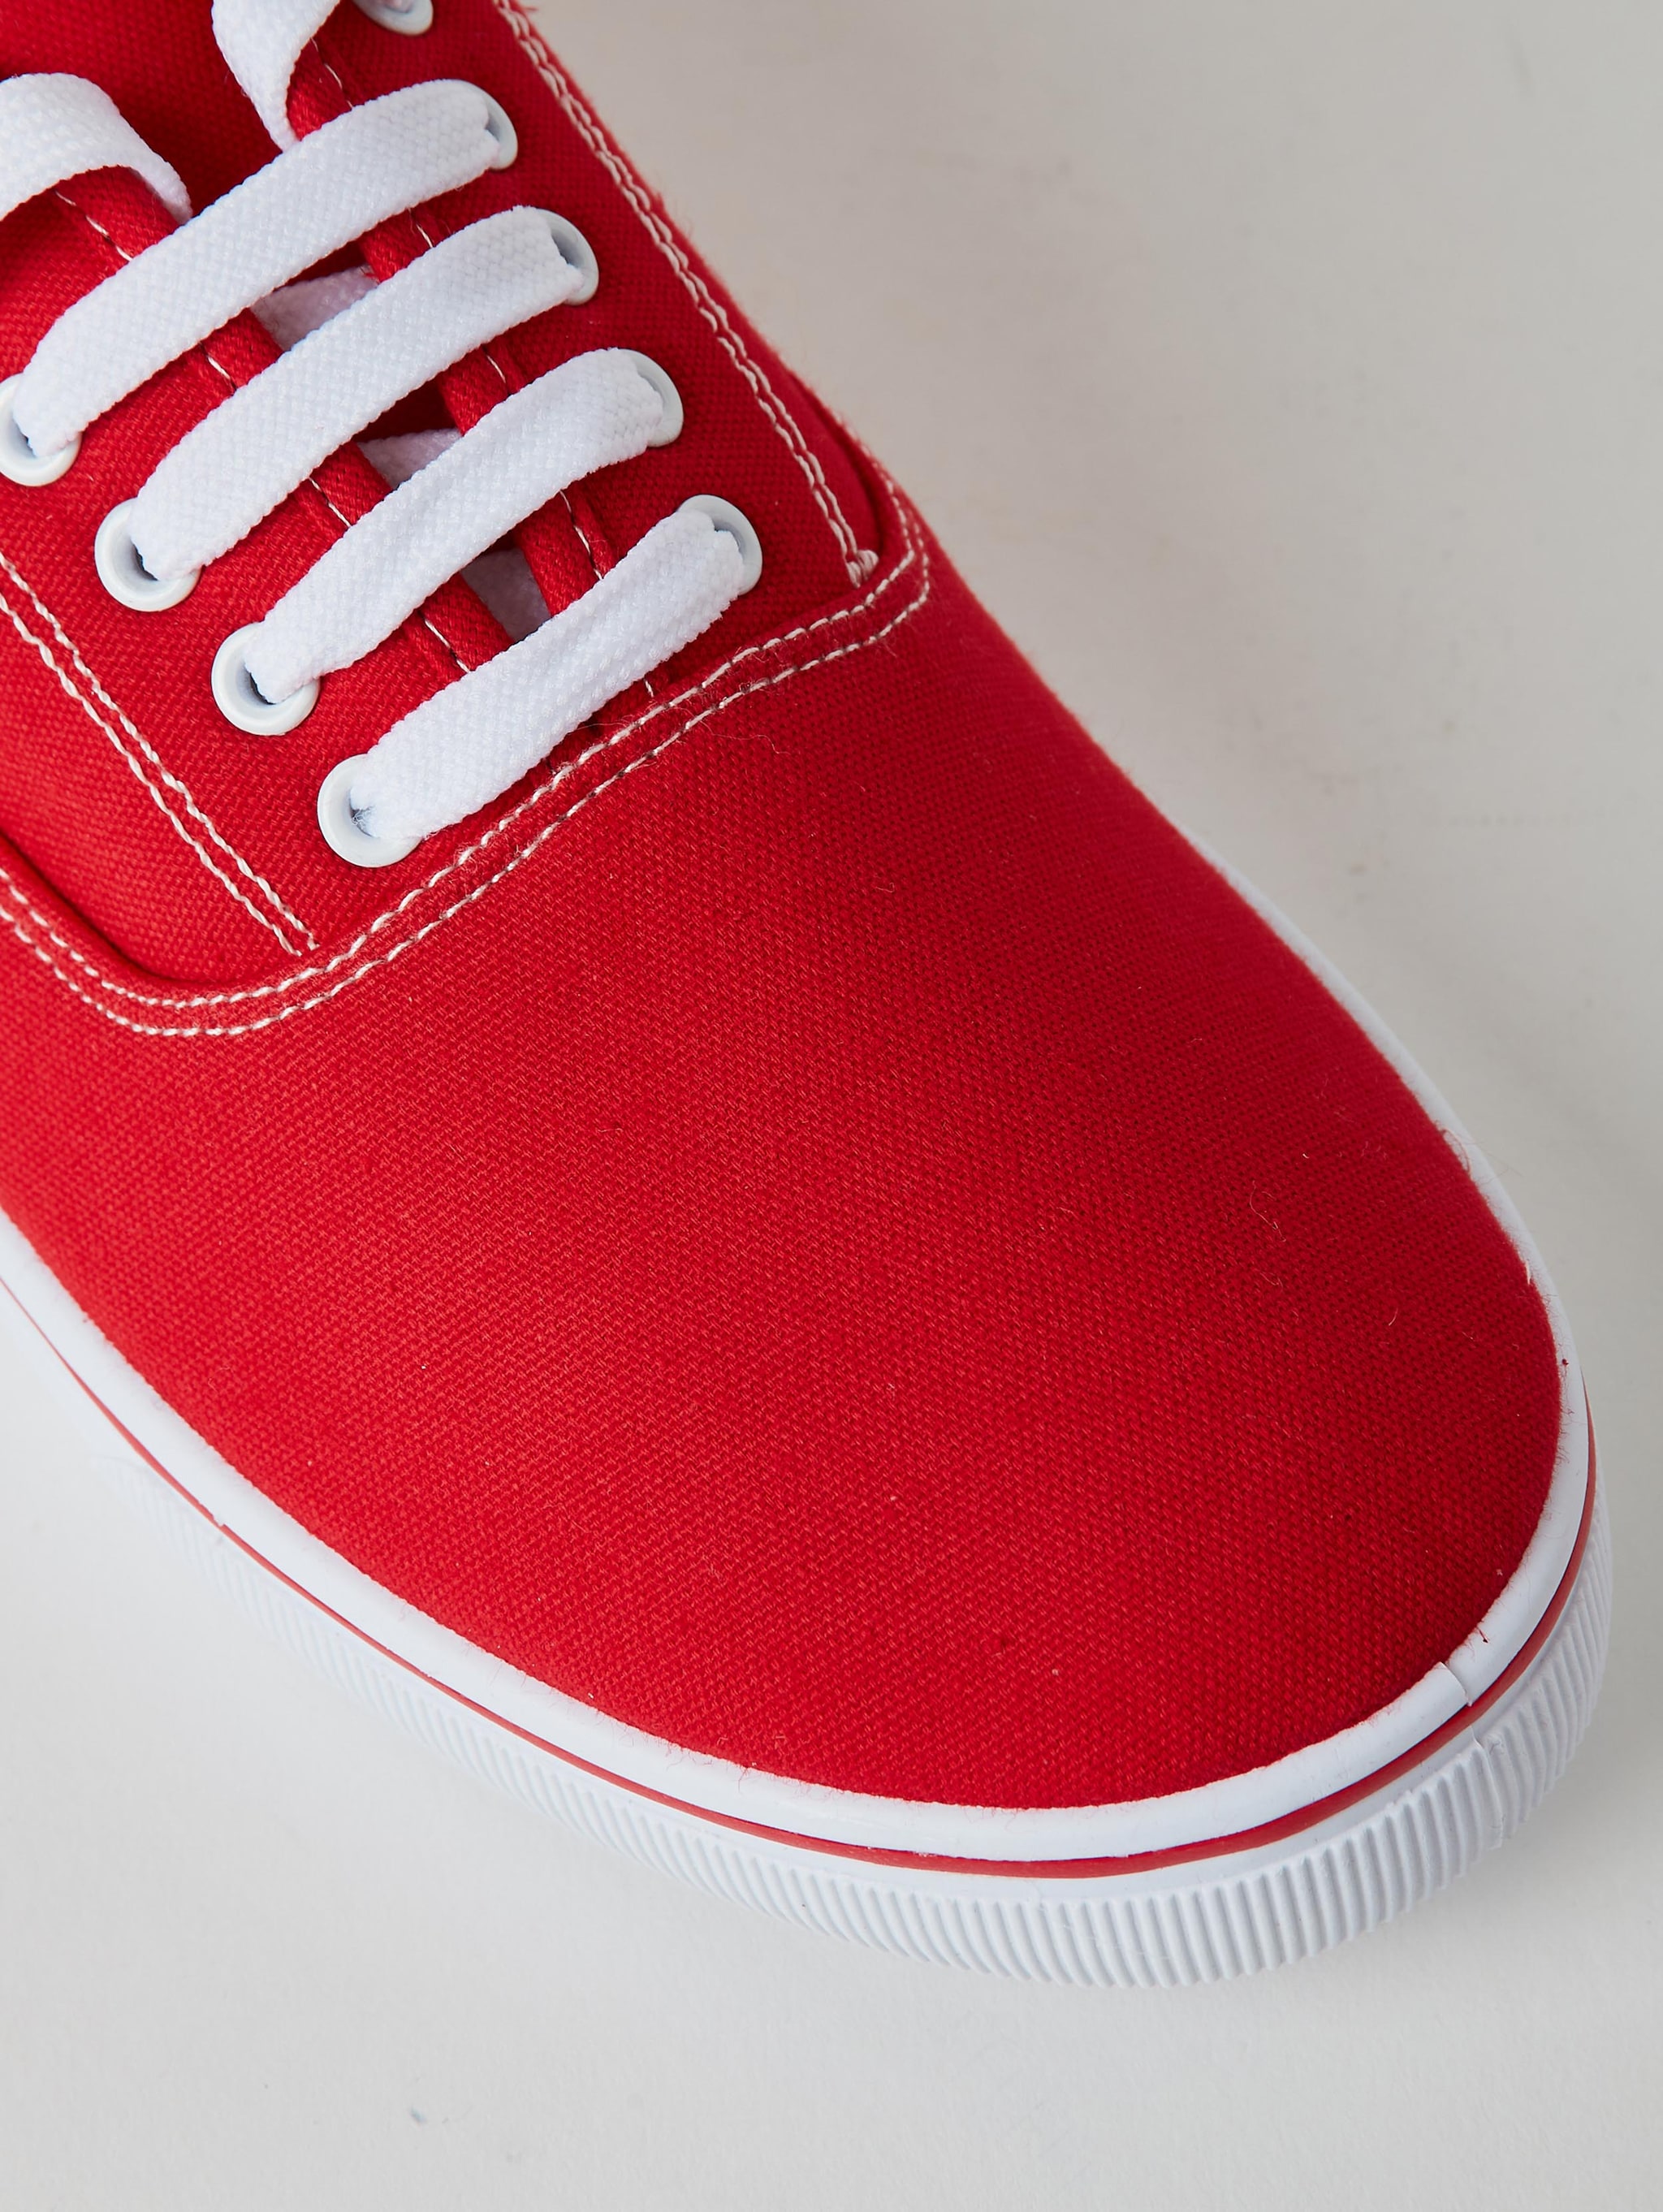 red tennis shoe